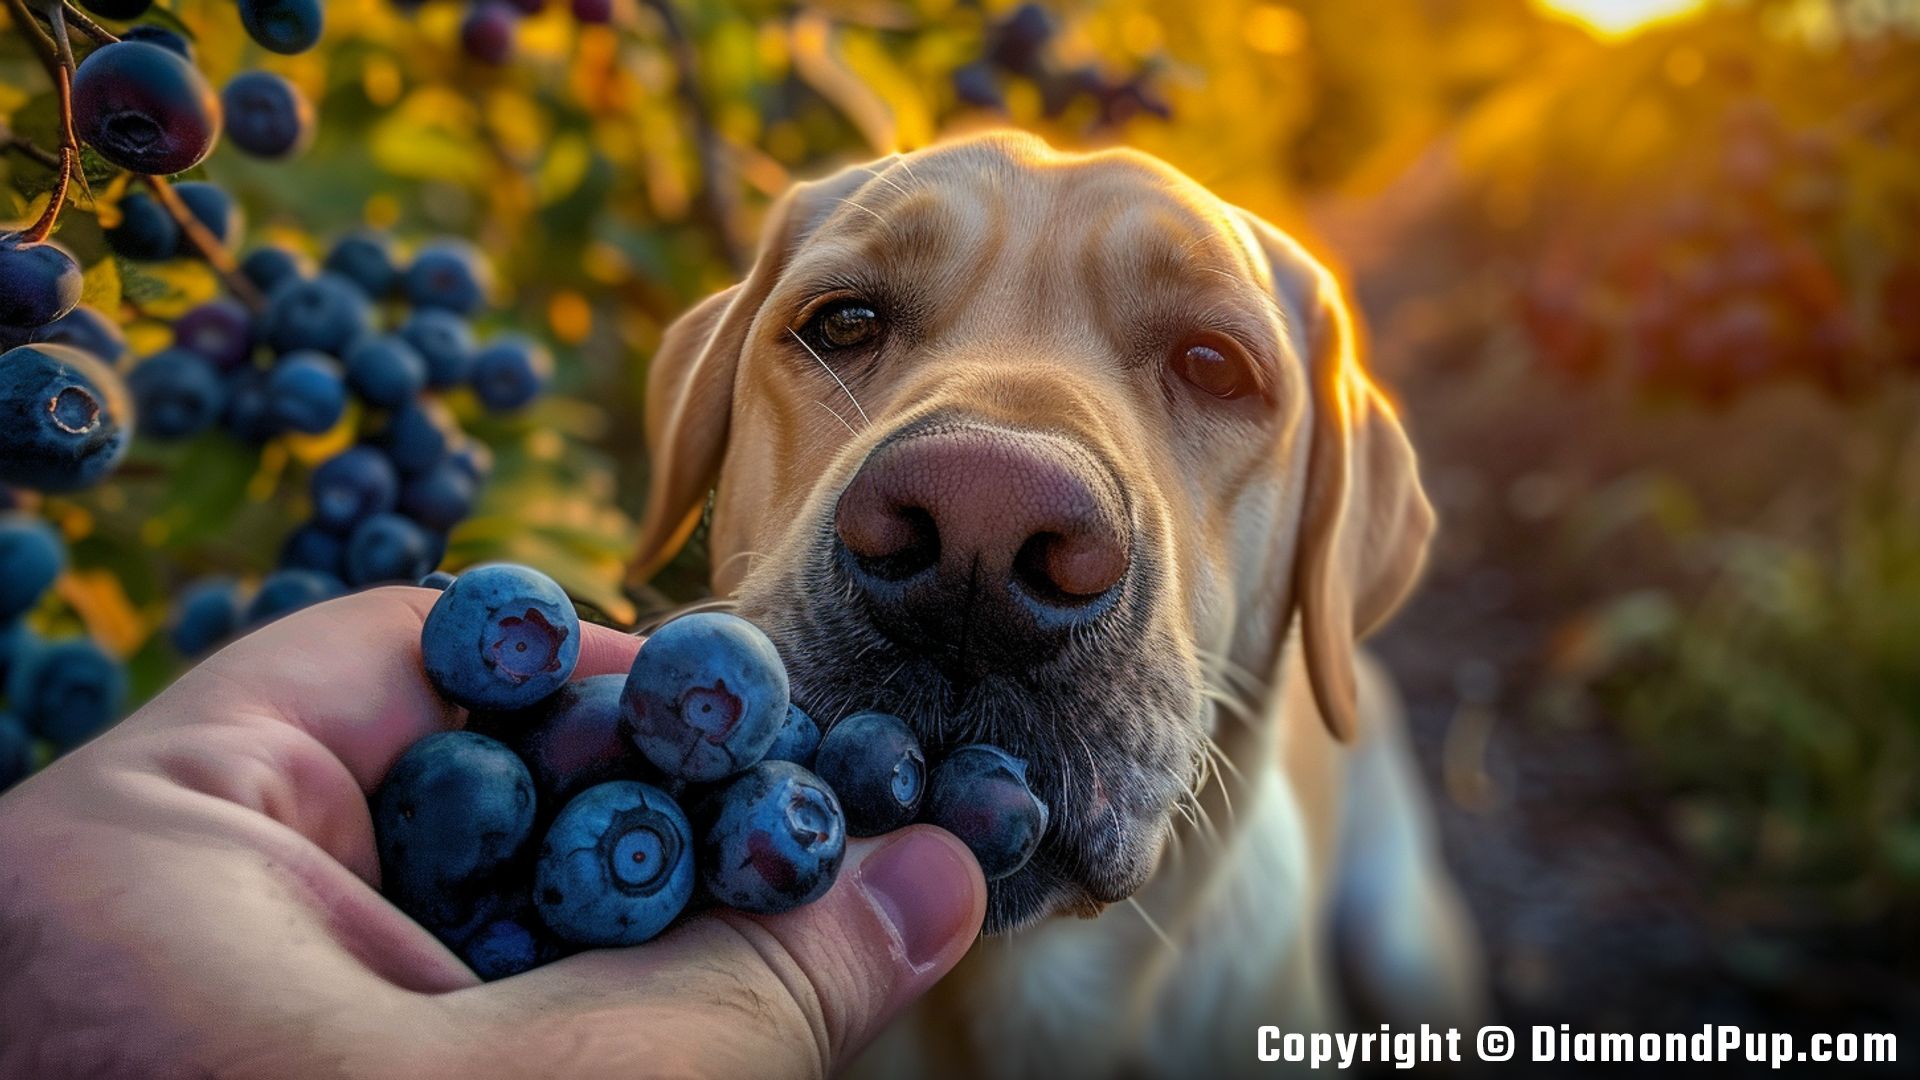 Photo of an Adorable Labrador Eating Blueberries